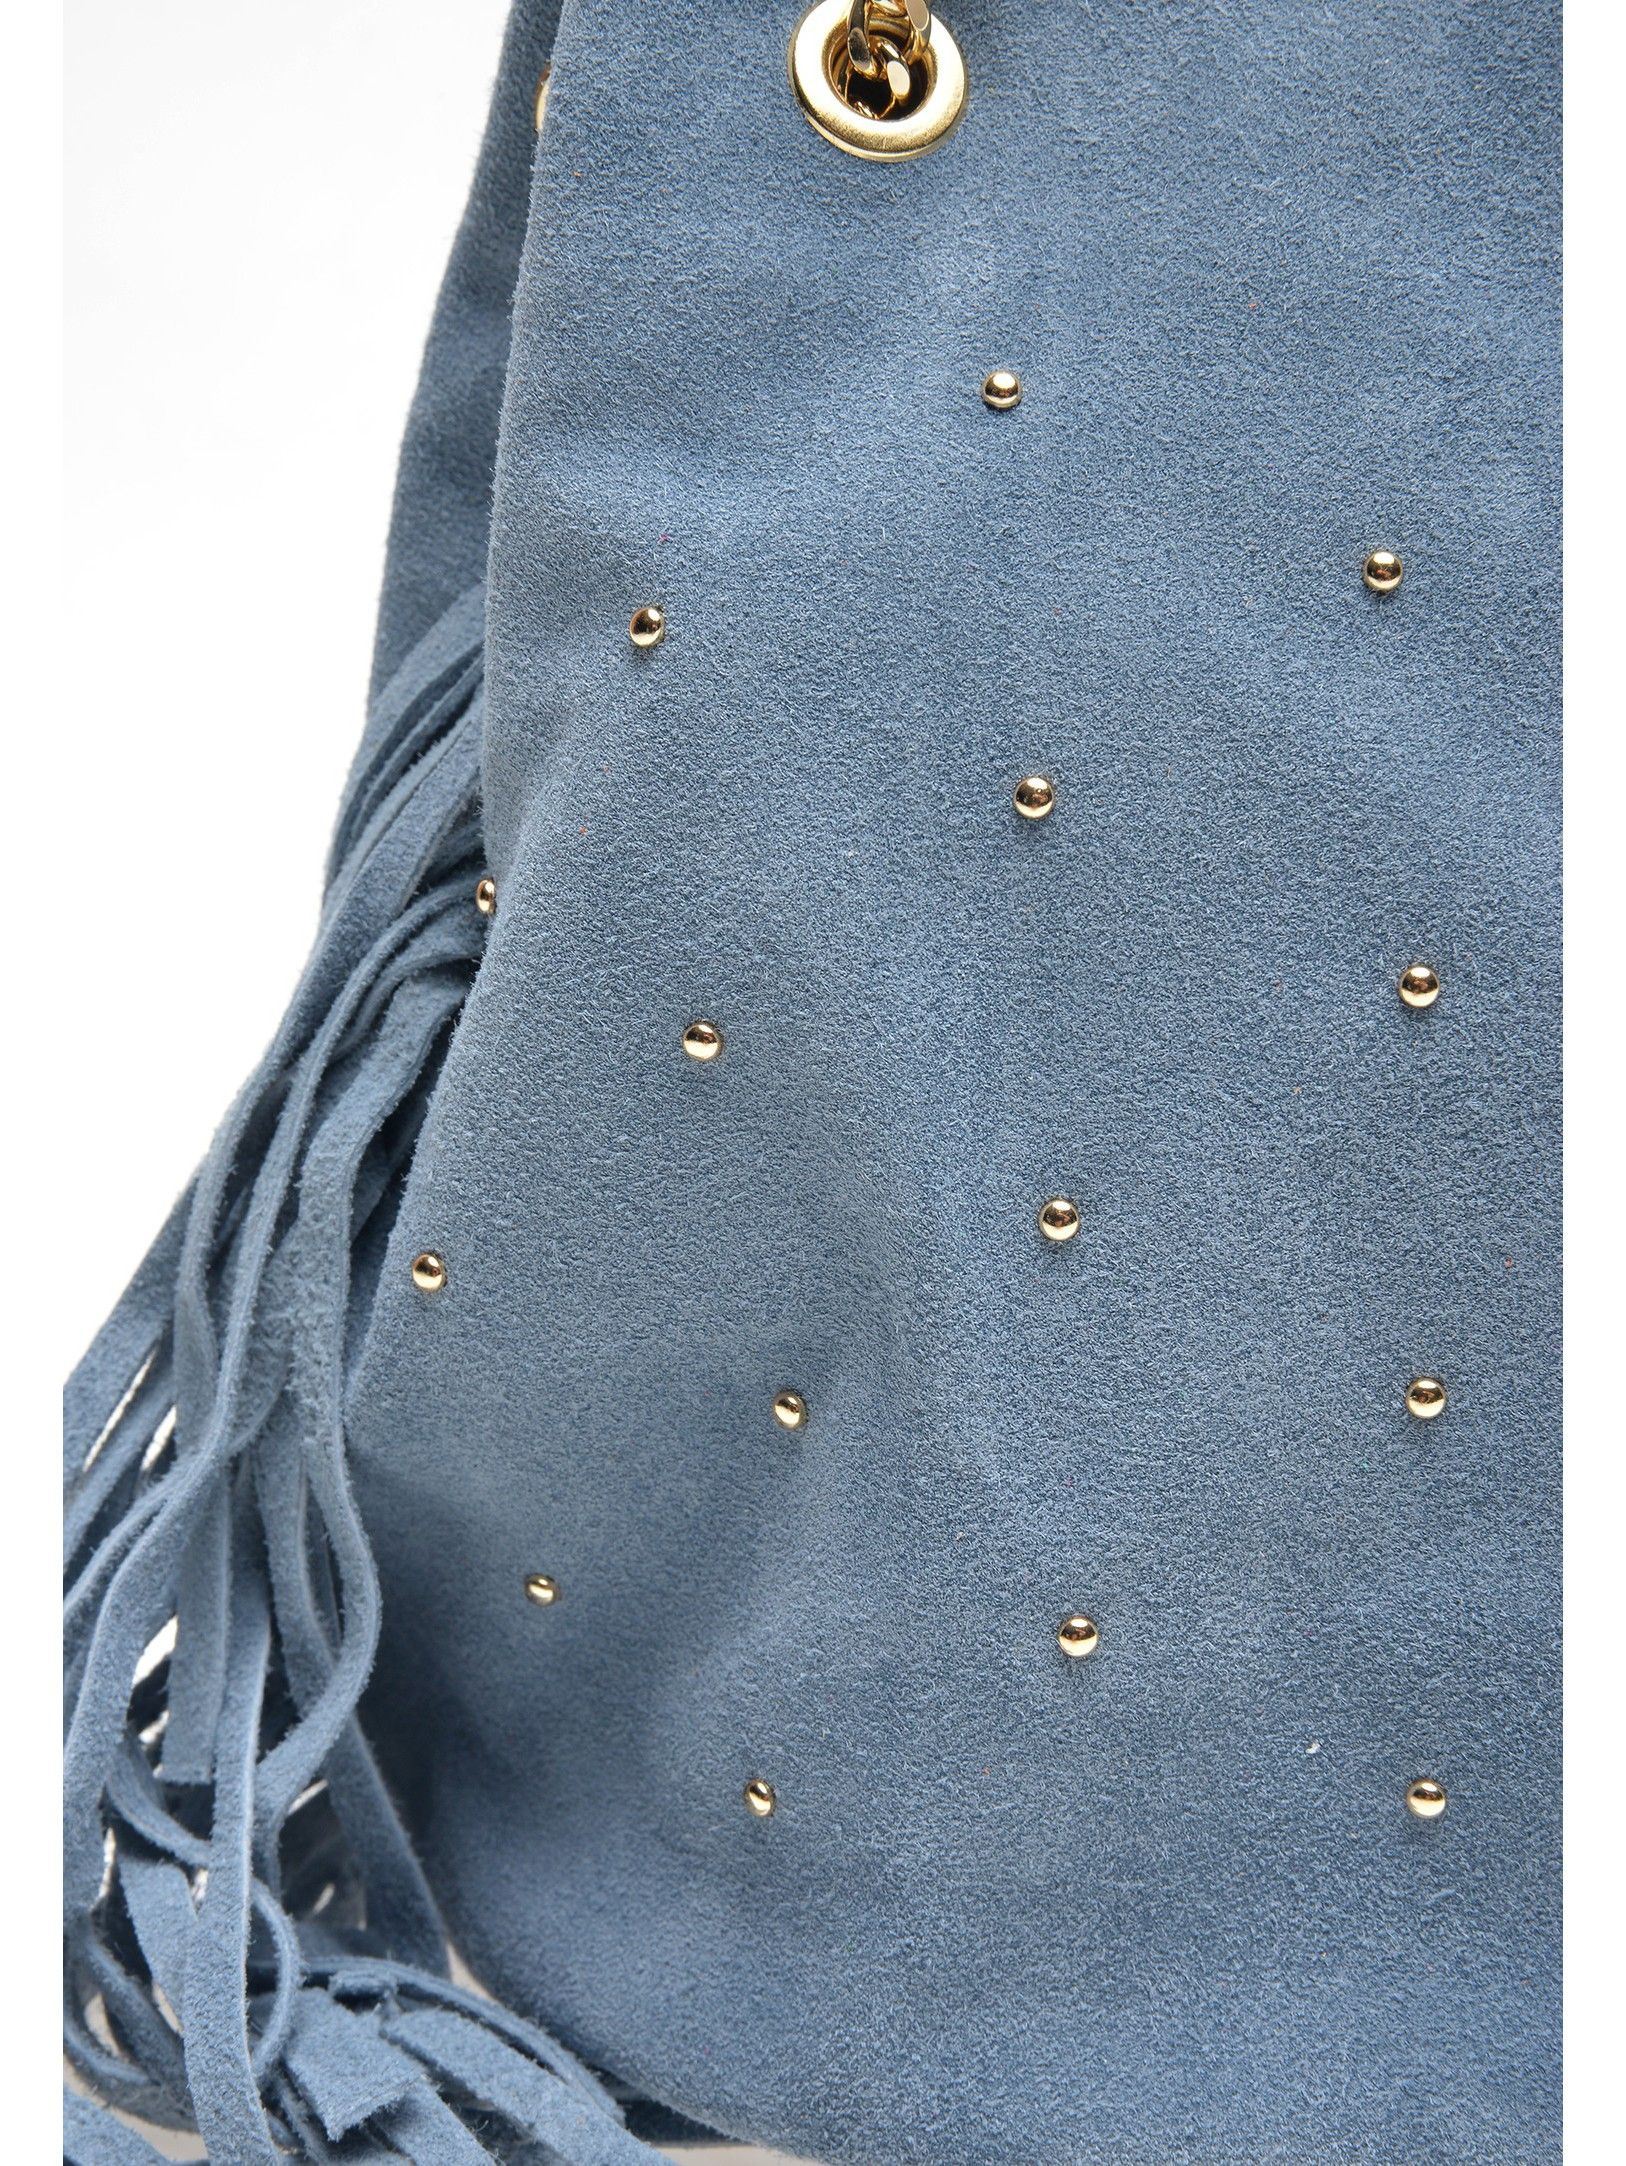 Shoulder bag
100% suede
Magnetic closure
Inner zip pocket
Chain handle
Stud decoration
Dimensions (L): 24x27x19 cm
Handle: /
Shoulder strap: 120 cm adjustable